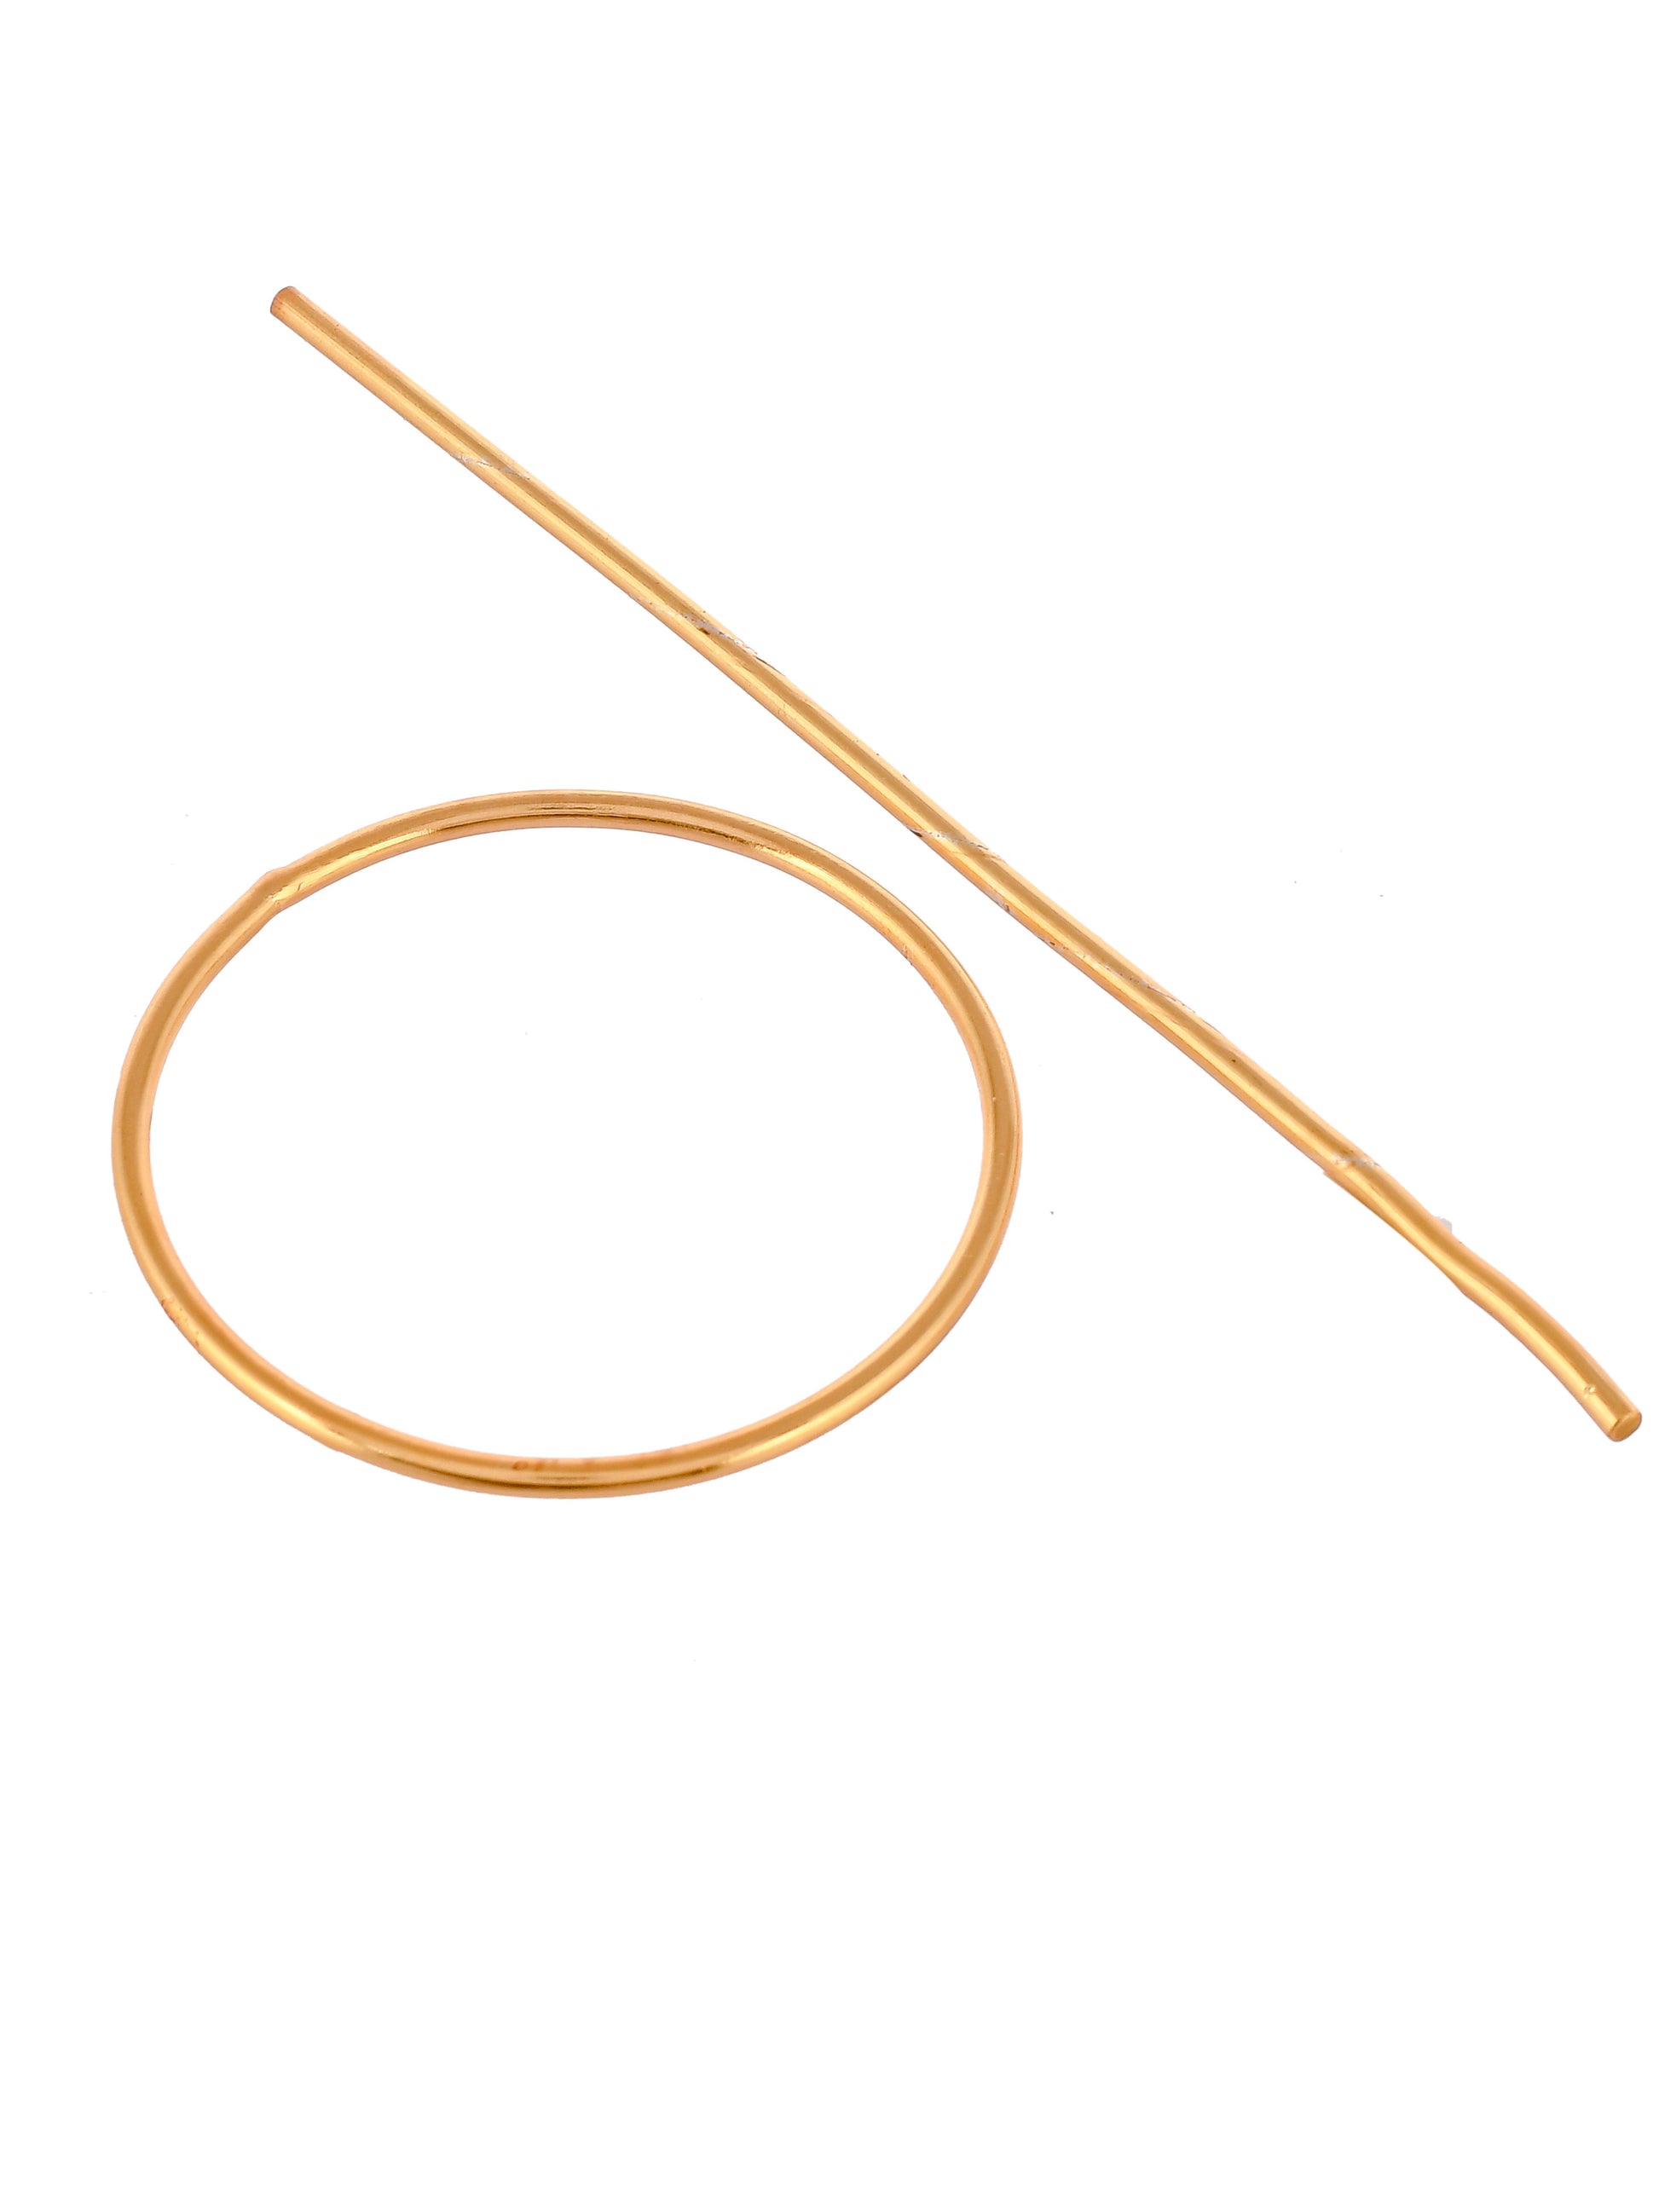 Circular Gold plated Hair Accessory